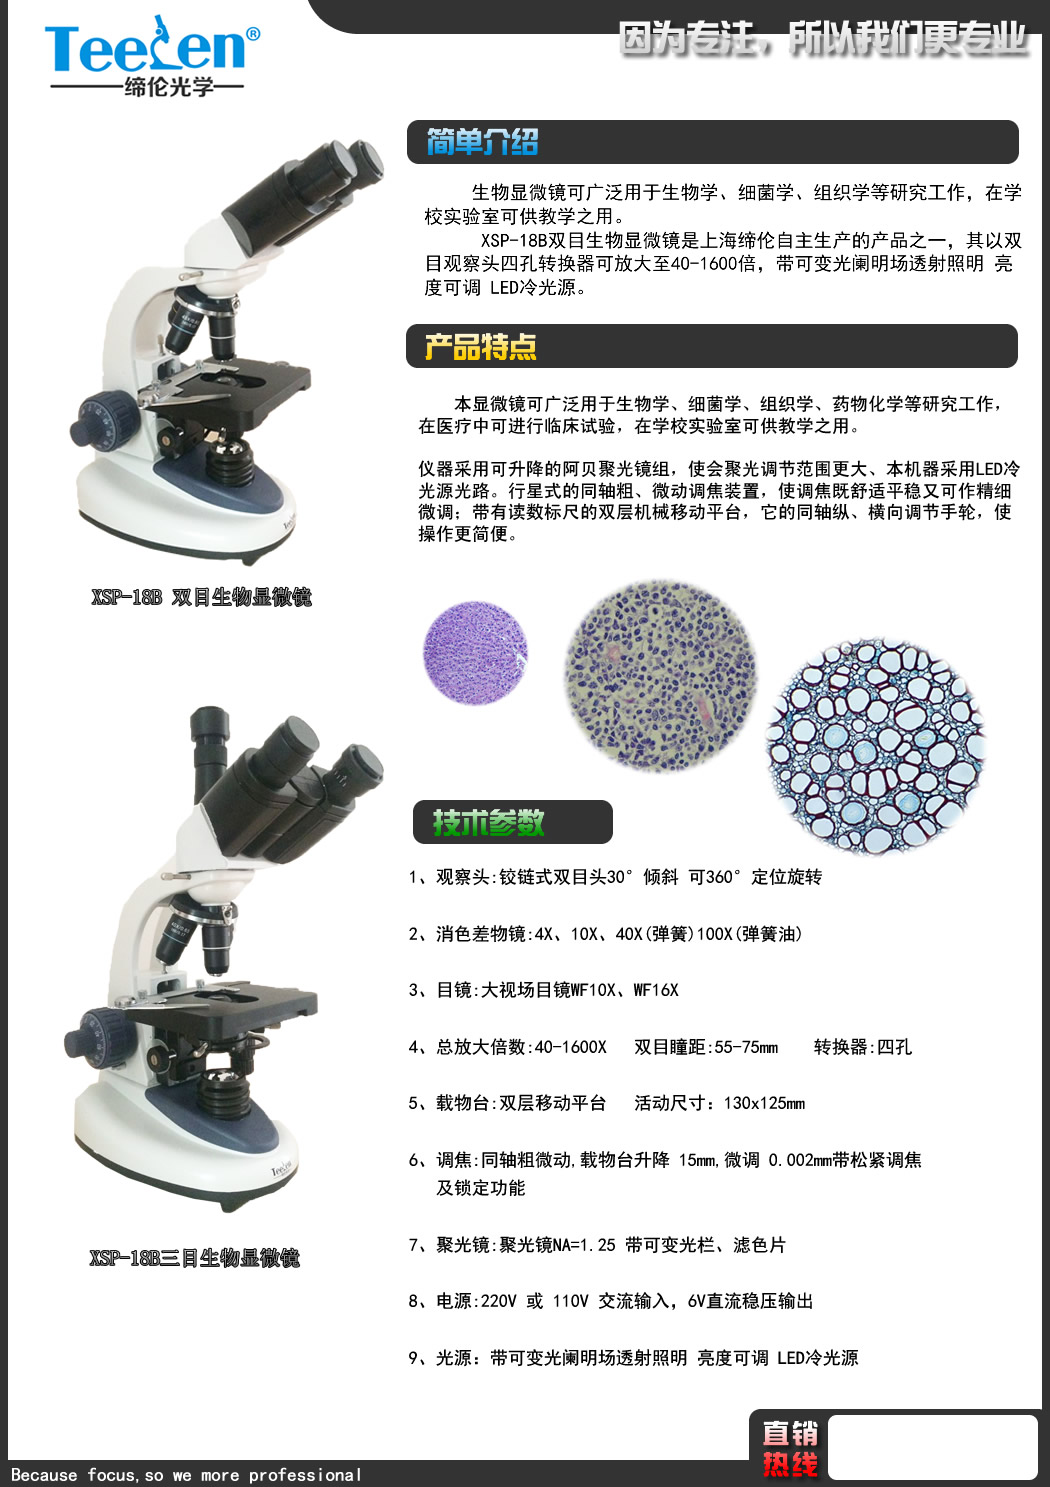 XSP-2CA-LED生物显微镜XSP-2CA-LED生物显微镜 武汉简易生物显微镜销售